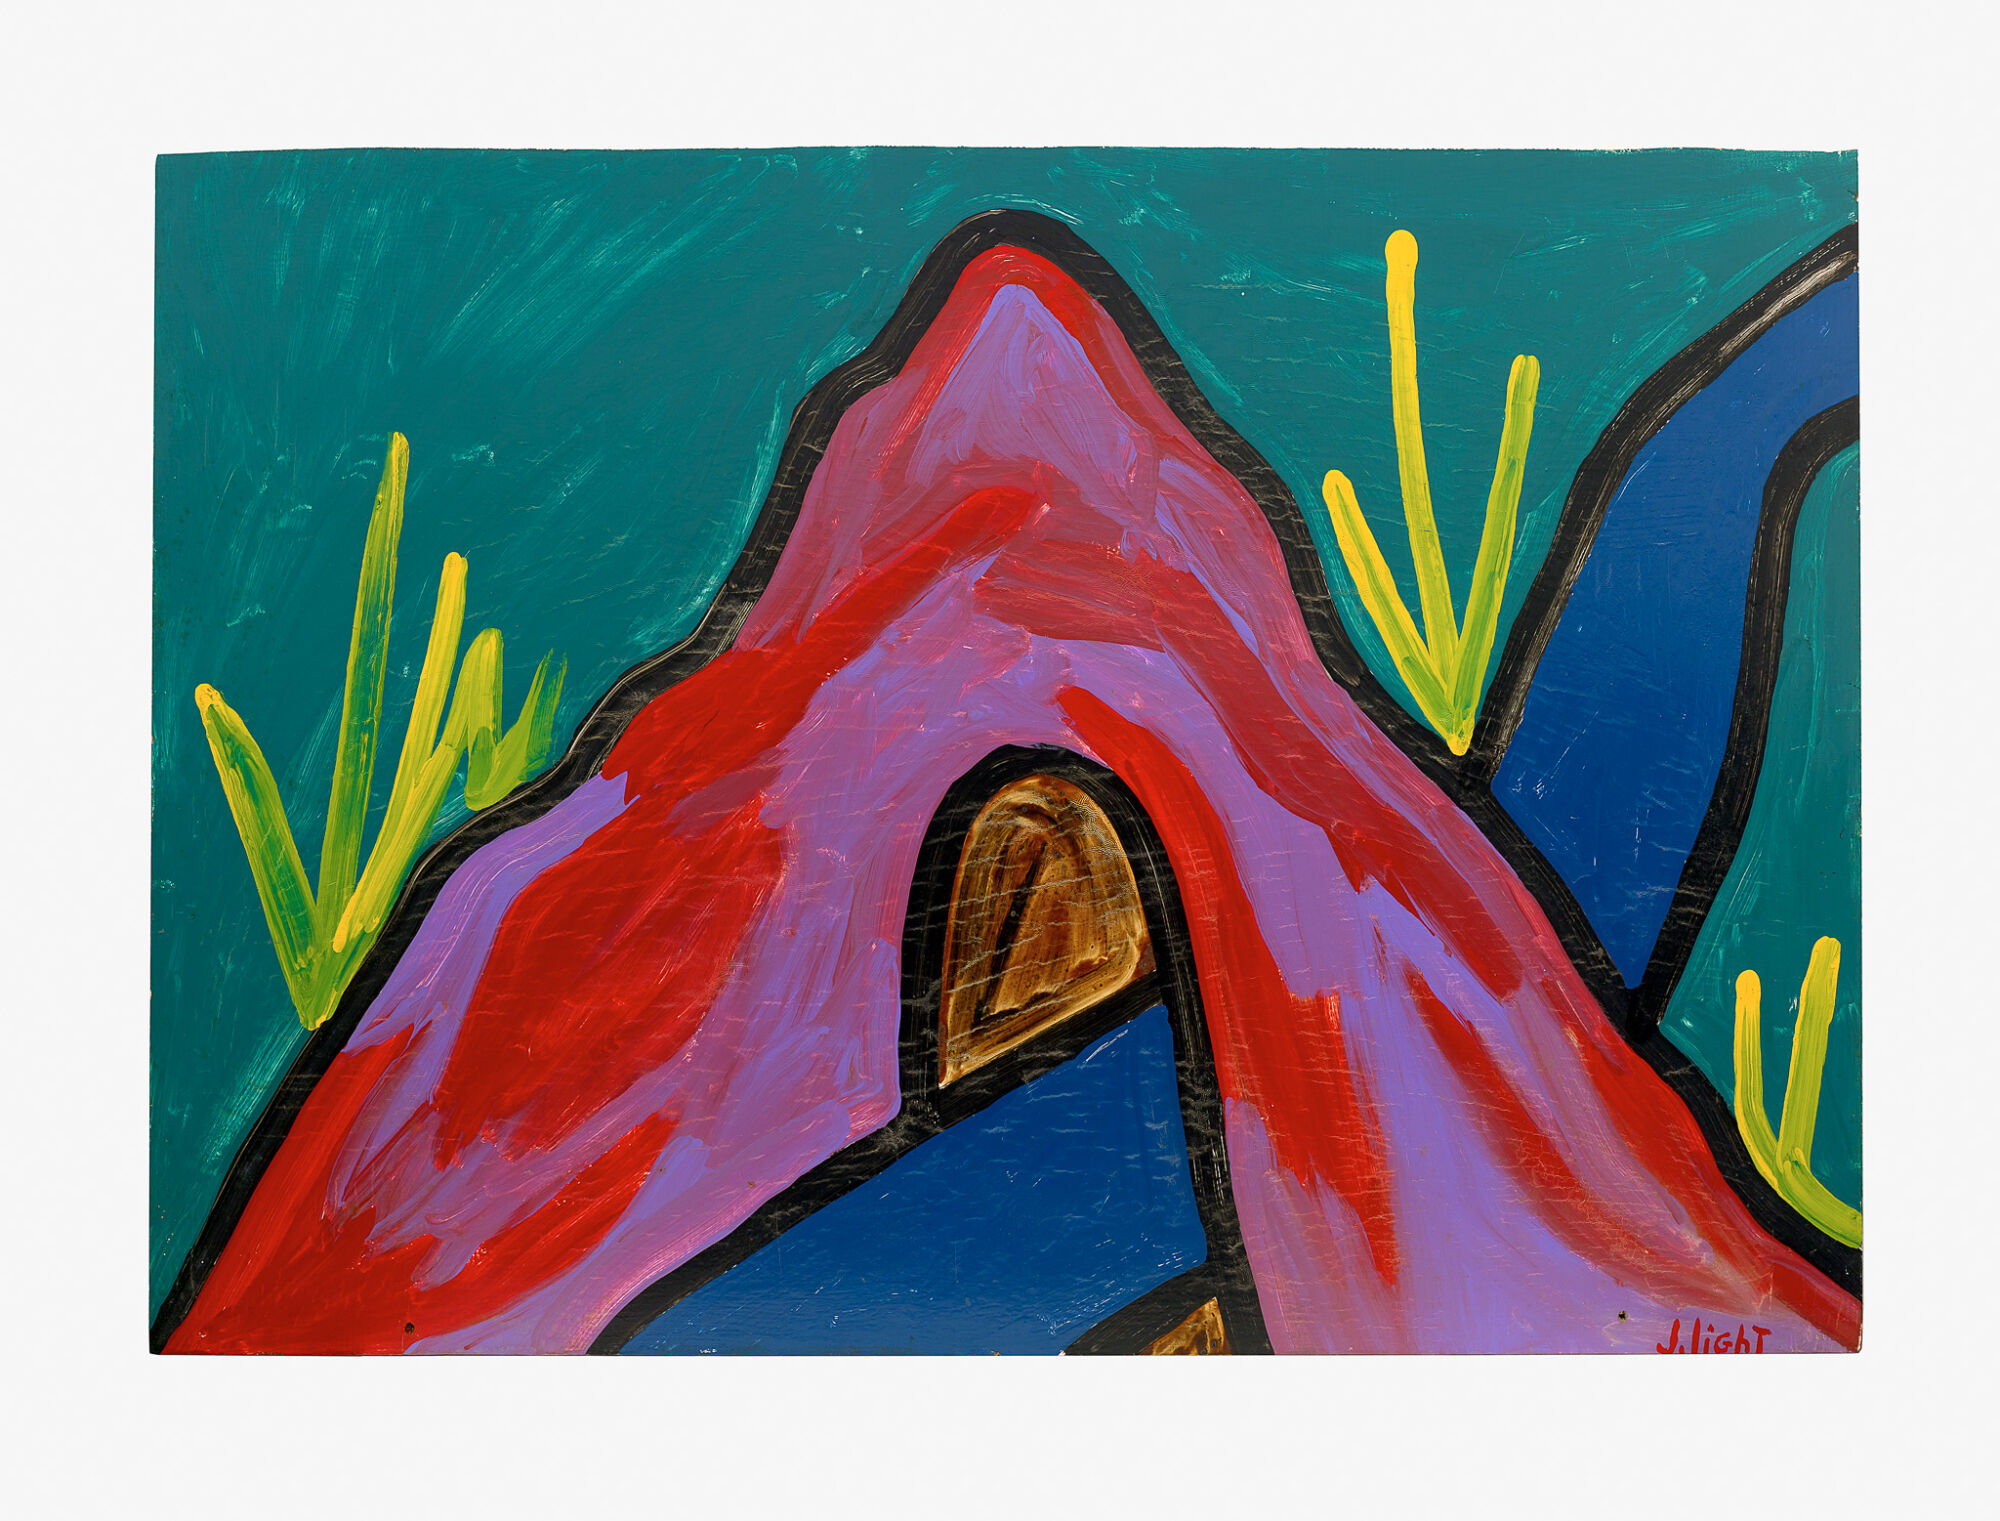 The Wick - Joe Light, Blue River Mountain, 1988. Enamel on wood, 81.3 x 121.9 cm. Souls Grown Deep Foundation, Atlanta. © ARS, NY and DACS, London 2023. Photo: Stephen Pitkin/Pitkin Studio